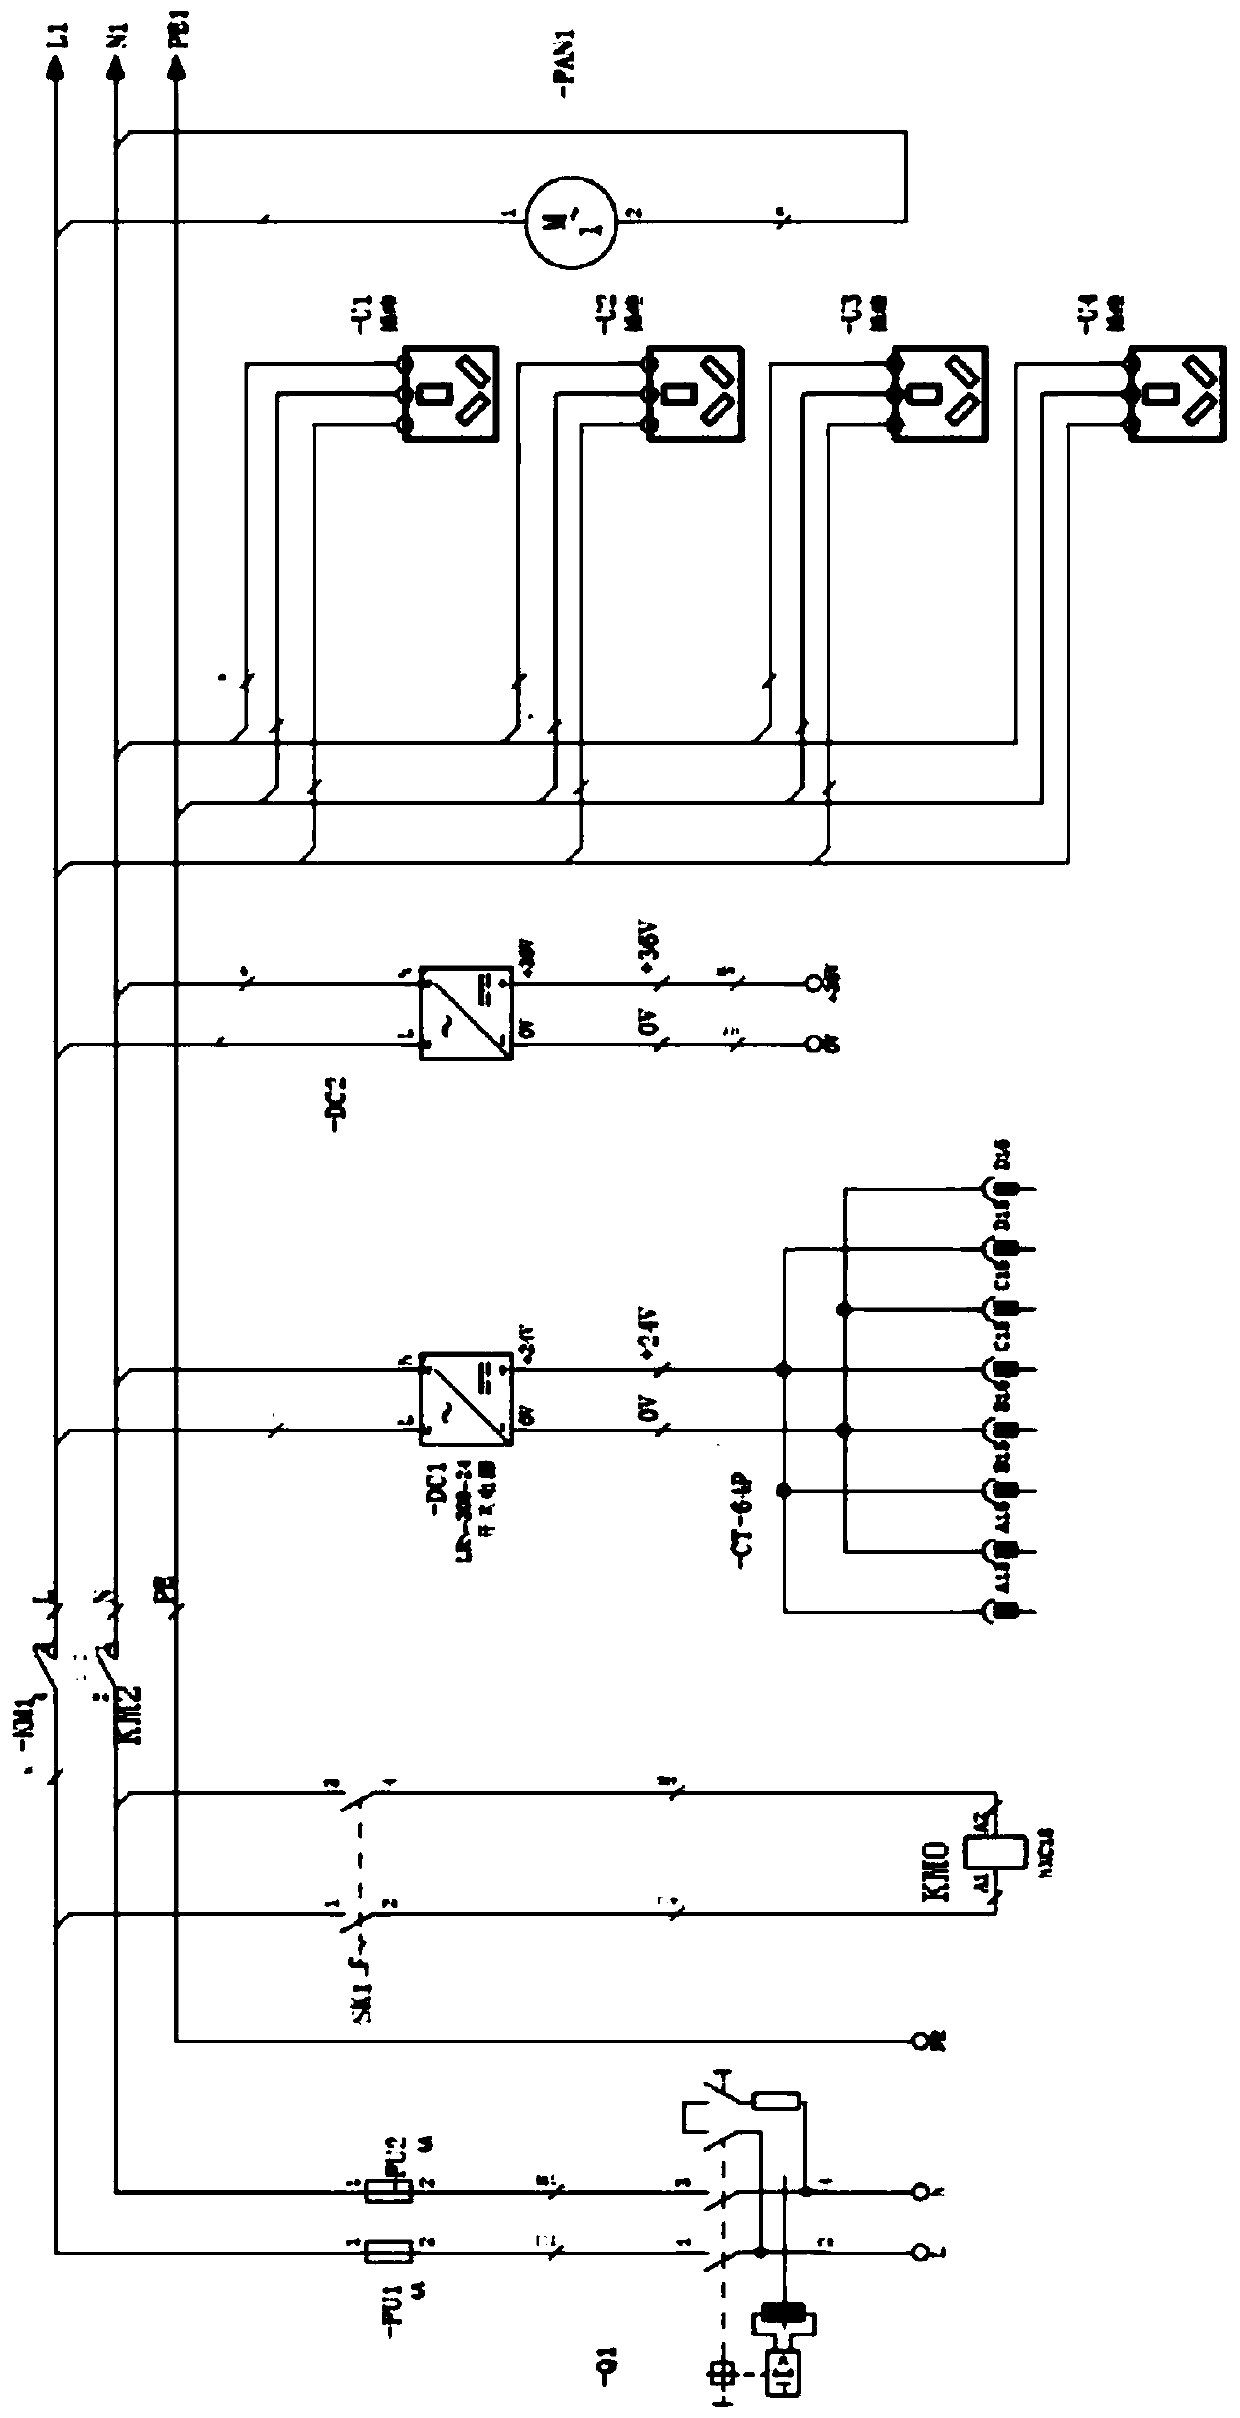 Upper cover dispensing control circuit of ink cartridge